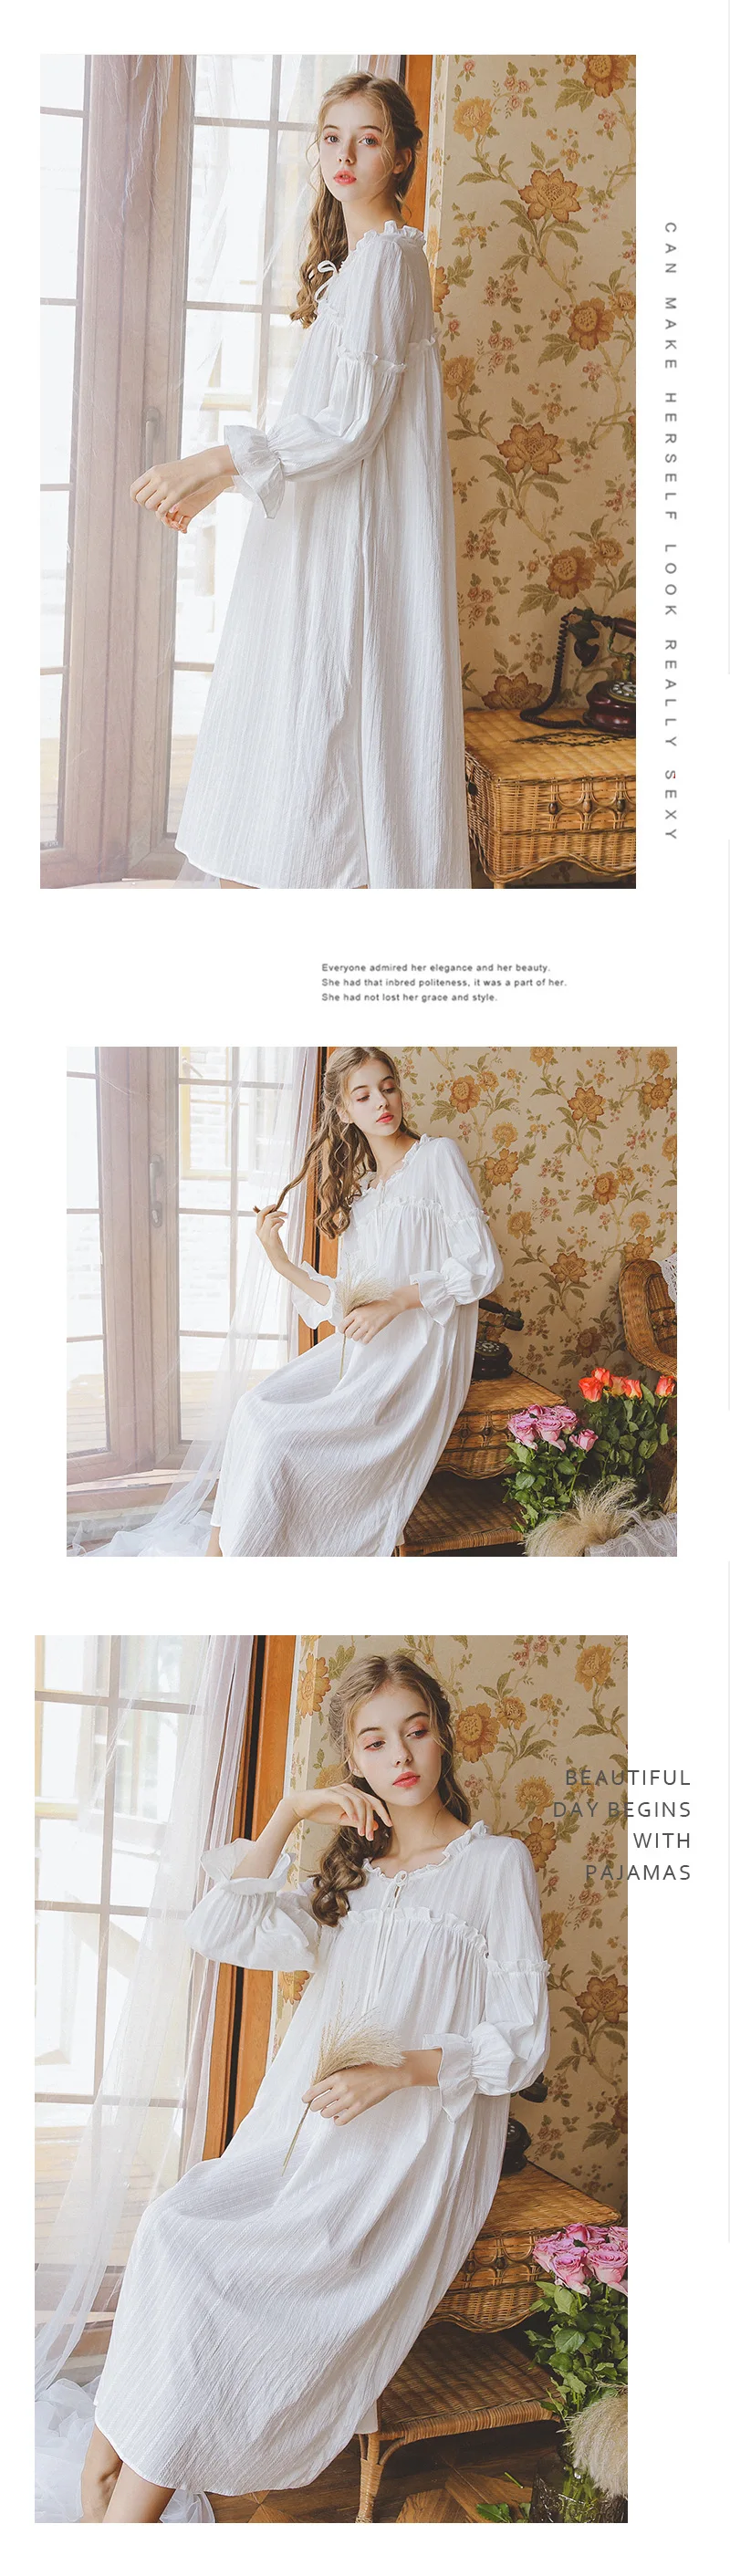 Womens Spring and Summer Sleeping Dress Princess Palace Vintage Night Gown Viscose Long Sleeves White Sleep Wear Sleepshirts